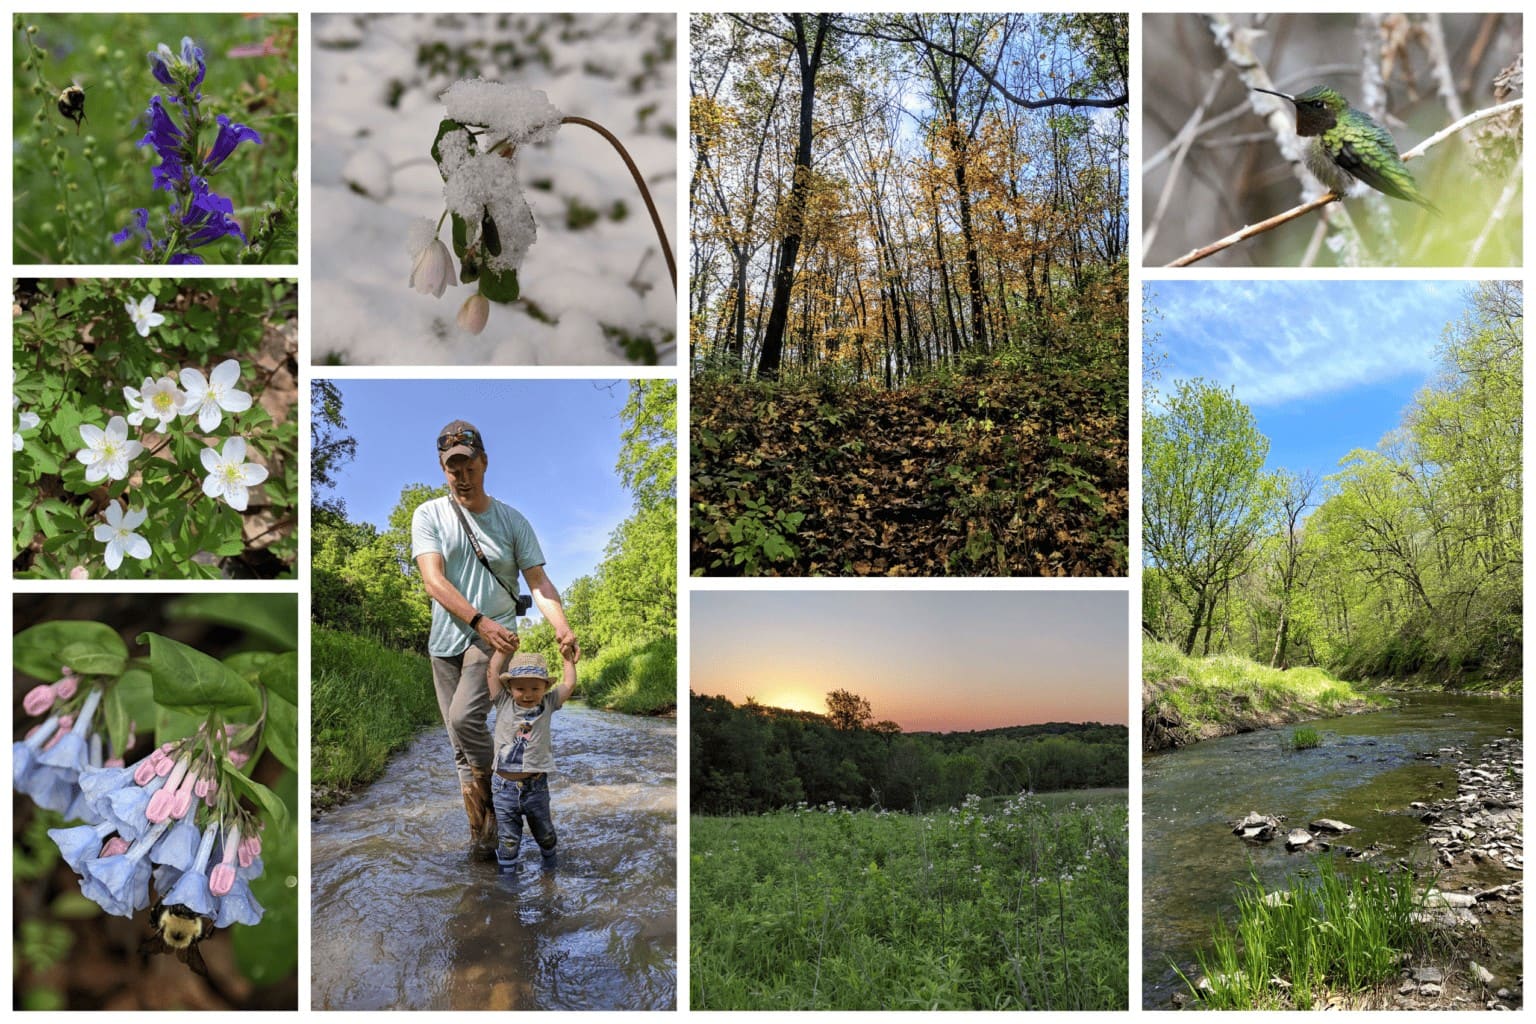  Turkey Creek Nature Preserve photos